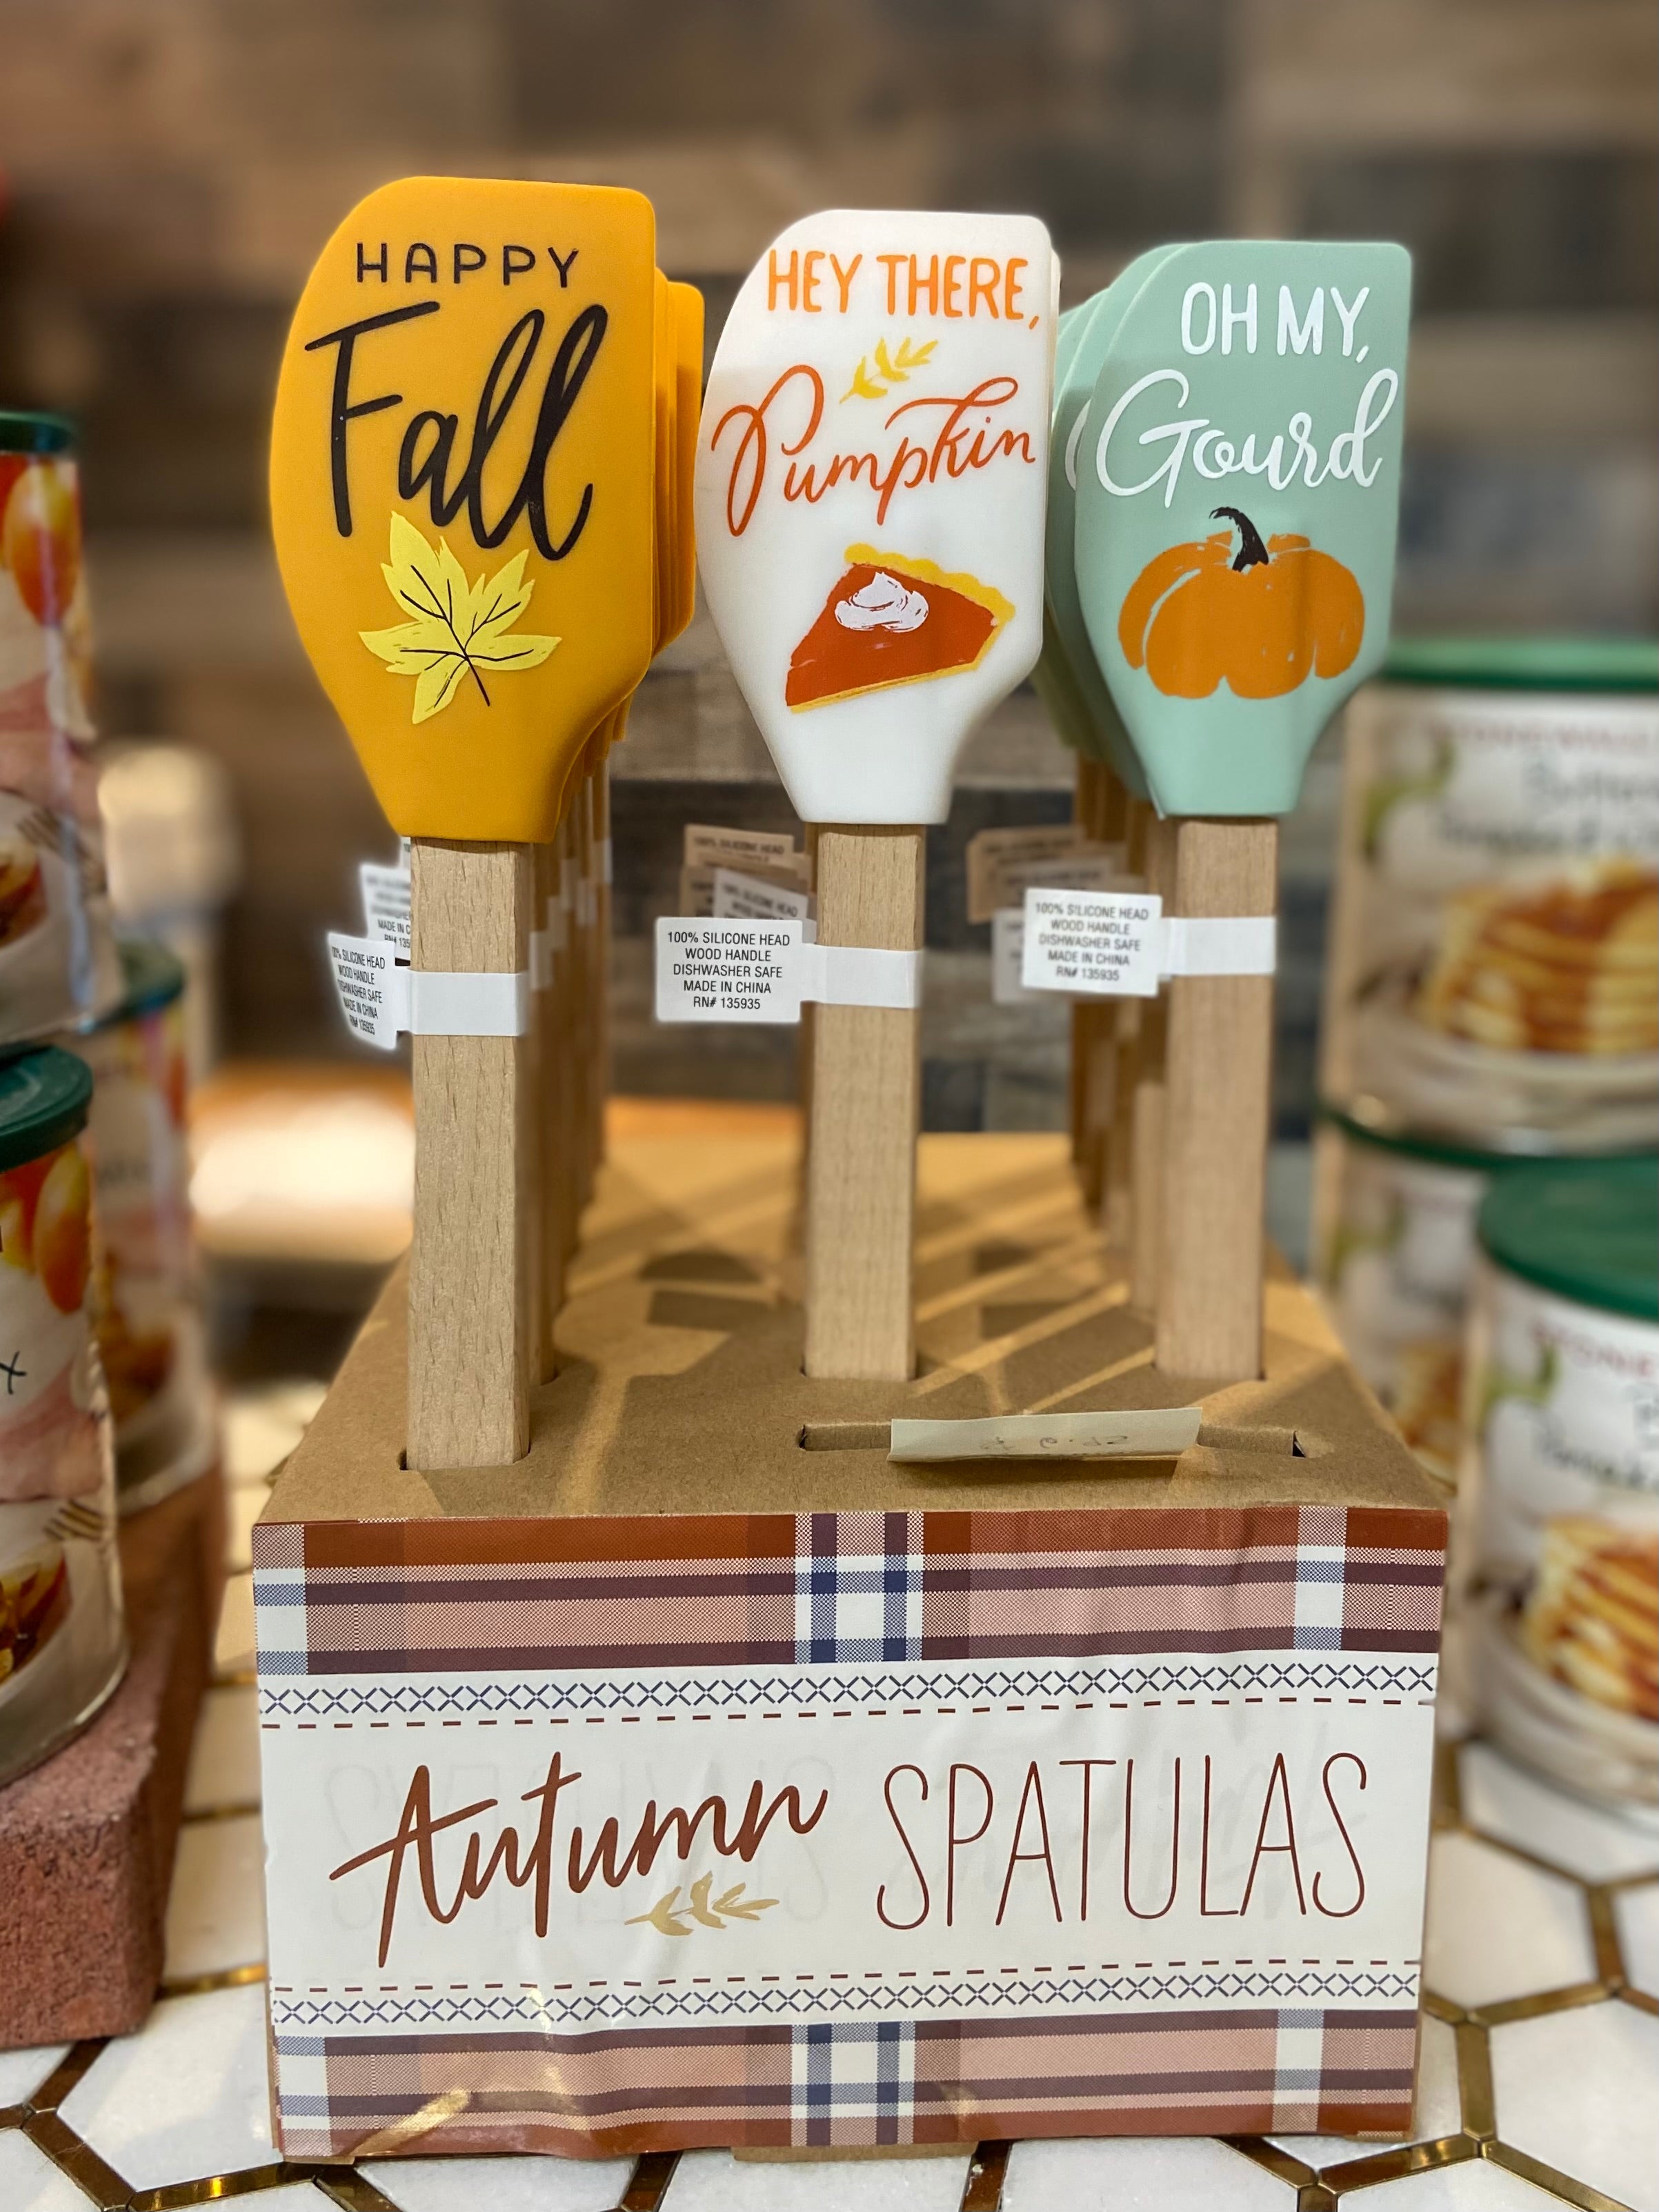 Autumn Spatulas - Olive Oil Etcetera